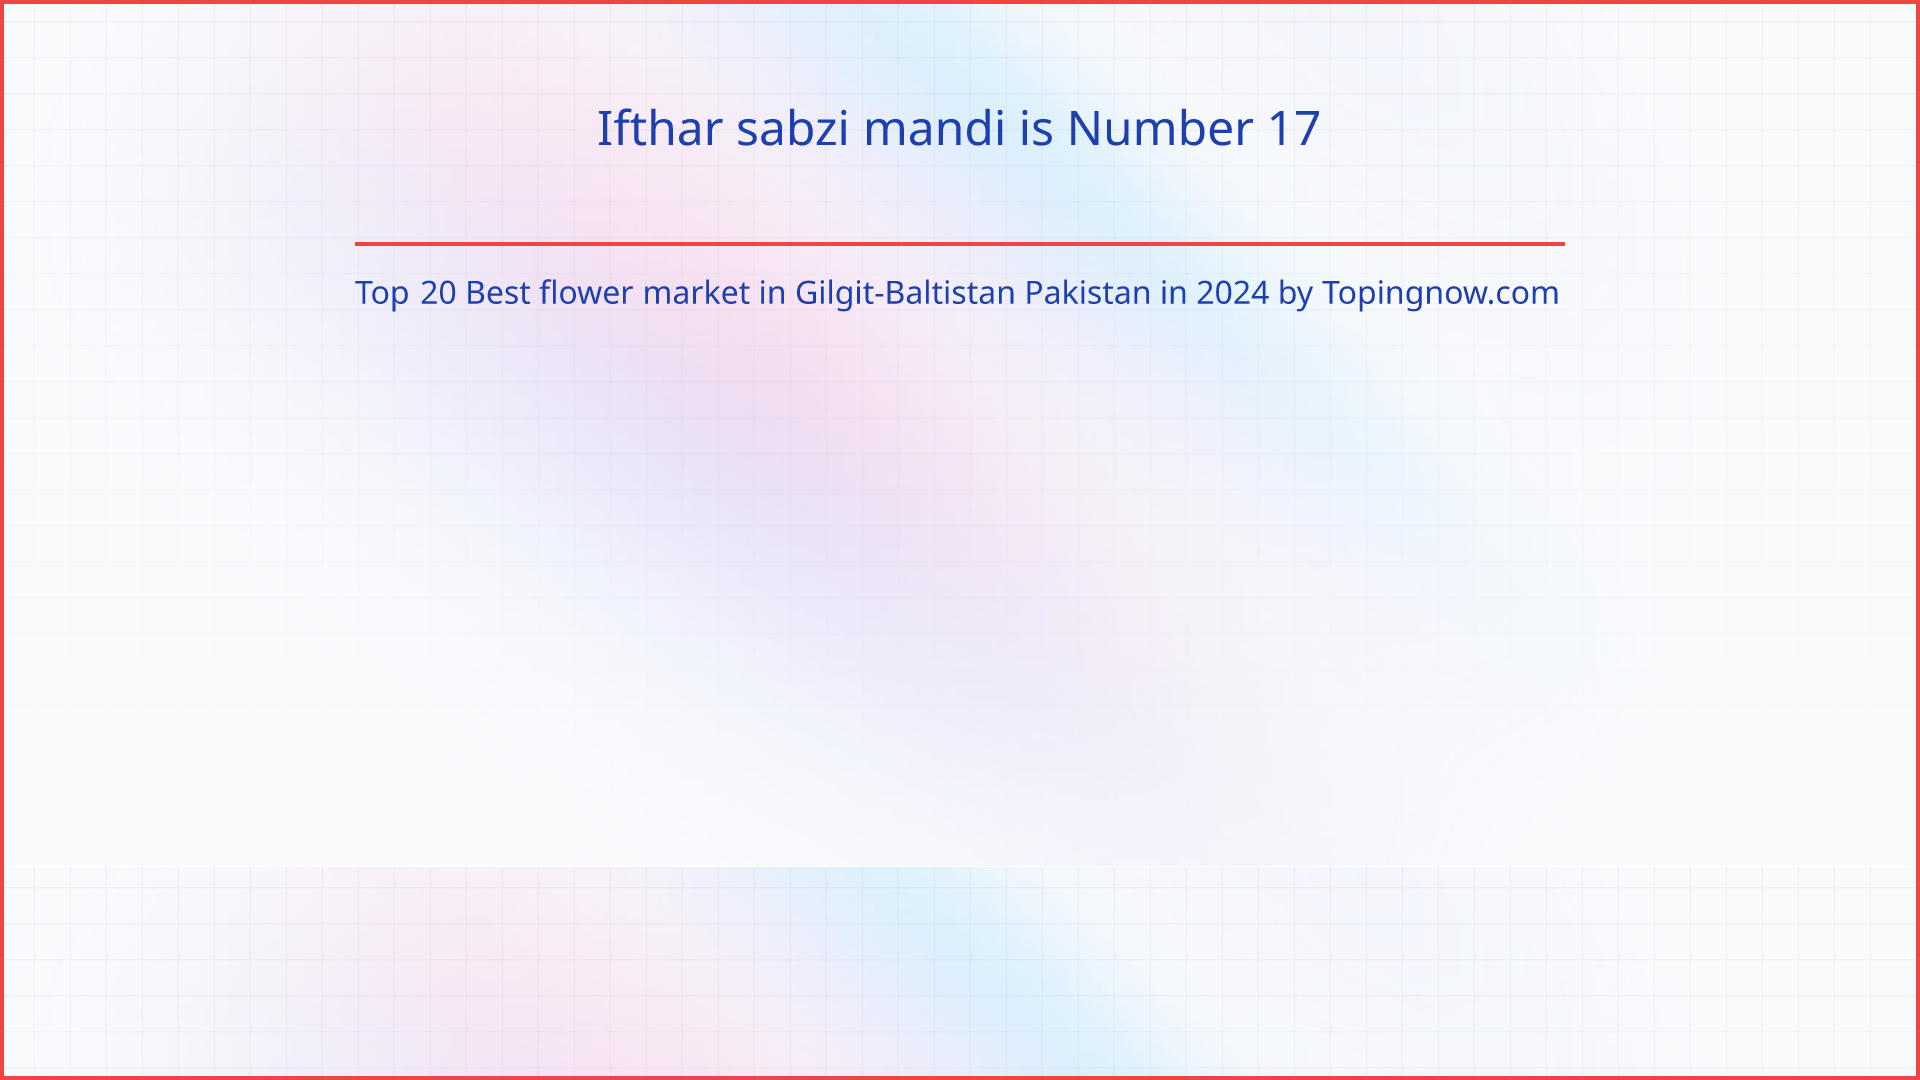 Ifthar sabzi mandi: Top 20 Best flower market in Gilgit-Baltistan Pakistan in 2024